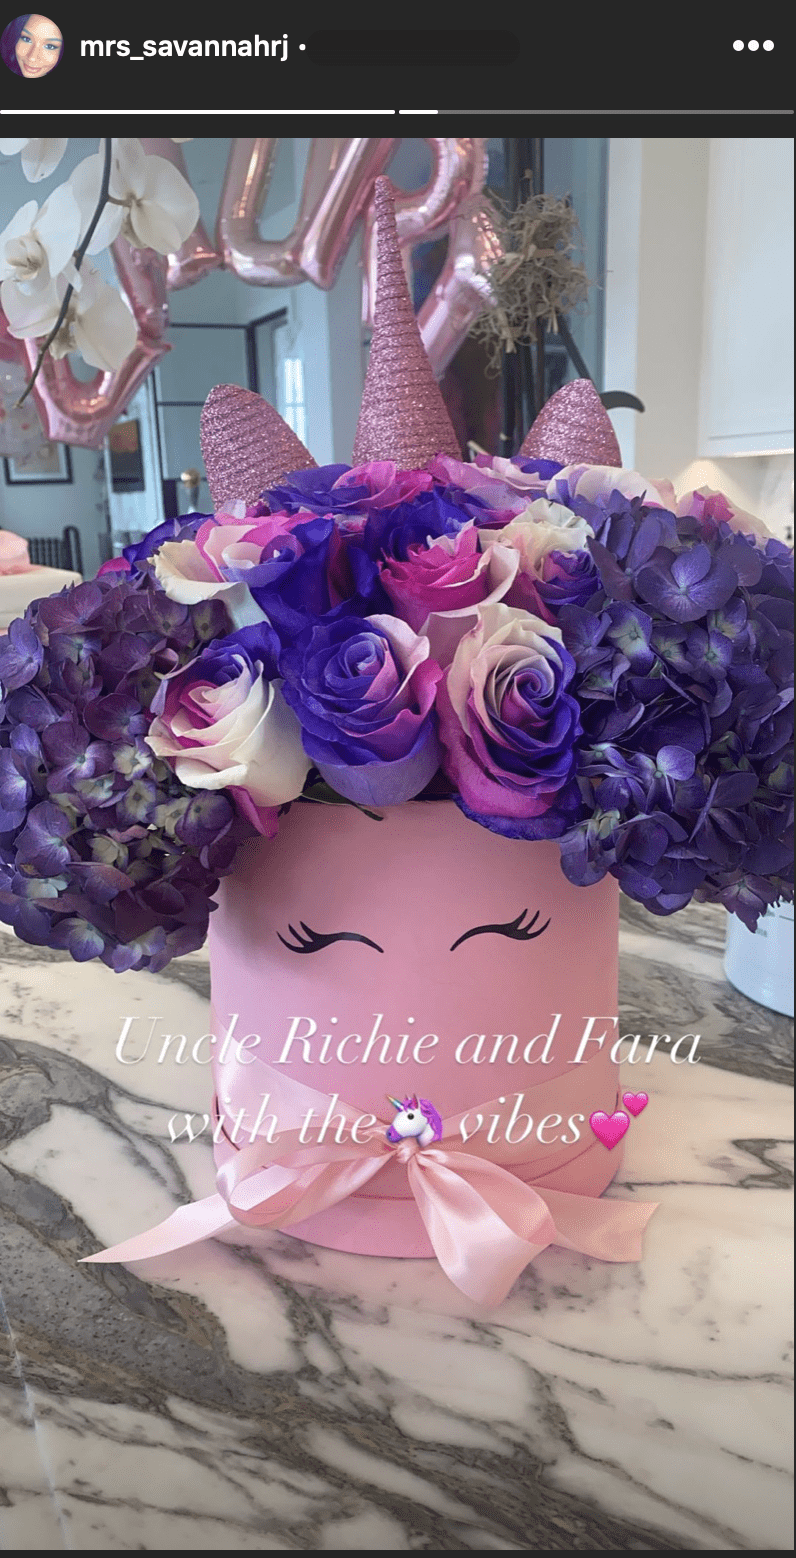 Zhuri James' birthday present from her loved ones. | Source: Instagram/mrs_savannahrj